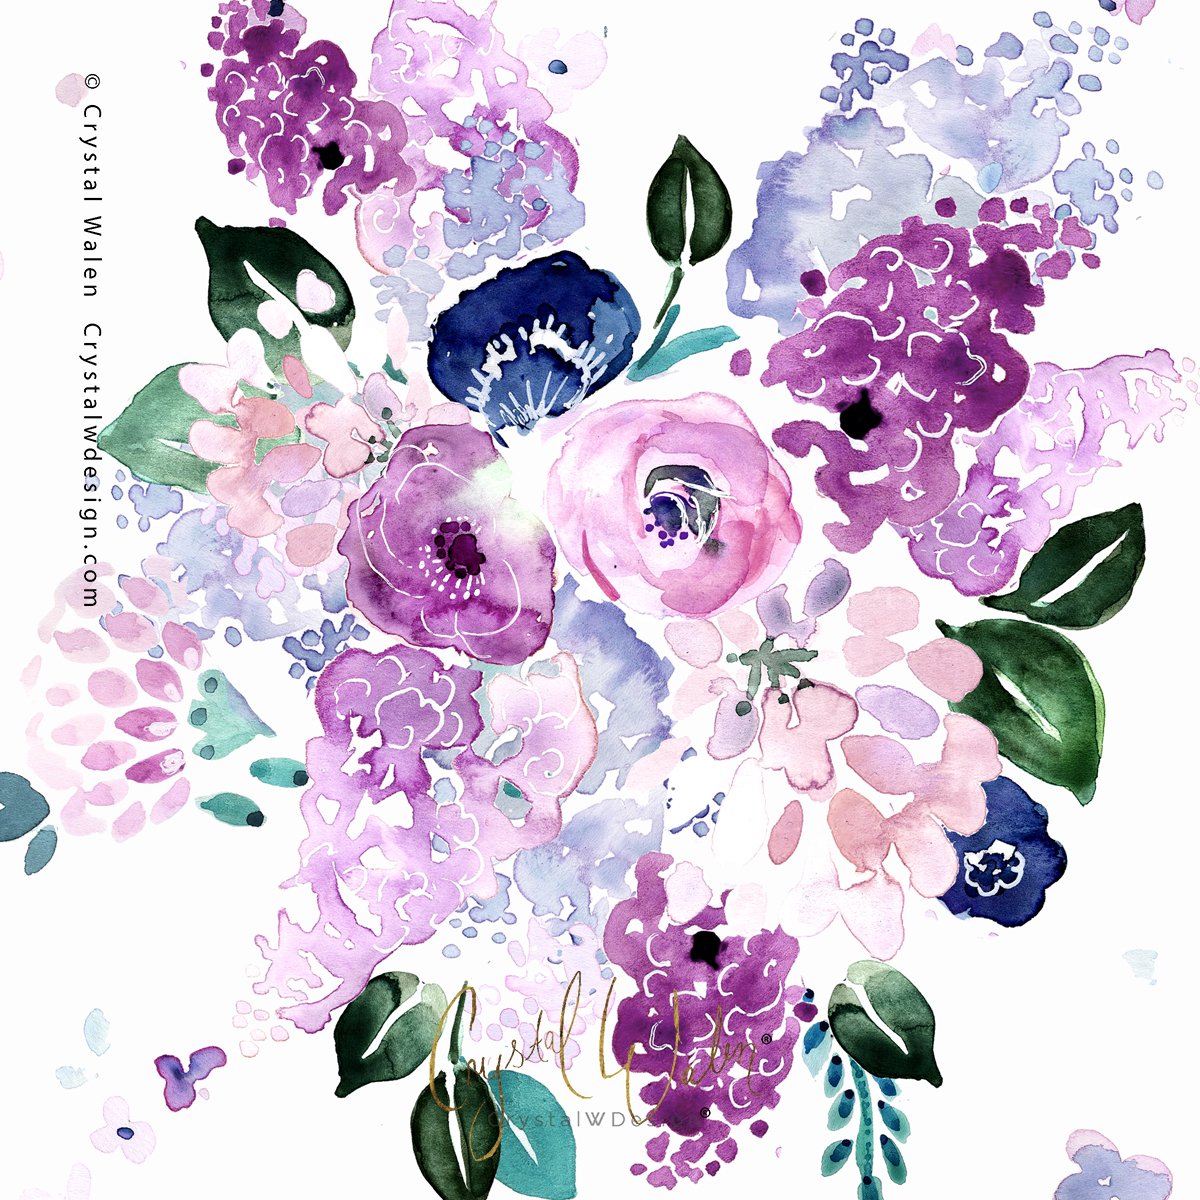 Lilac lavender Romance